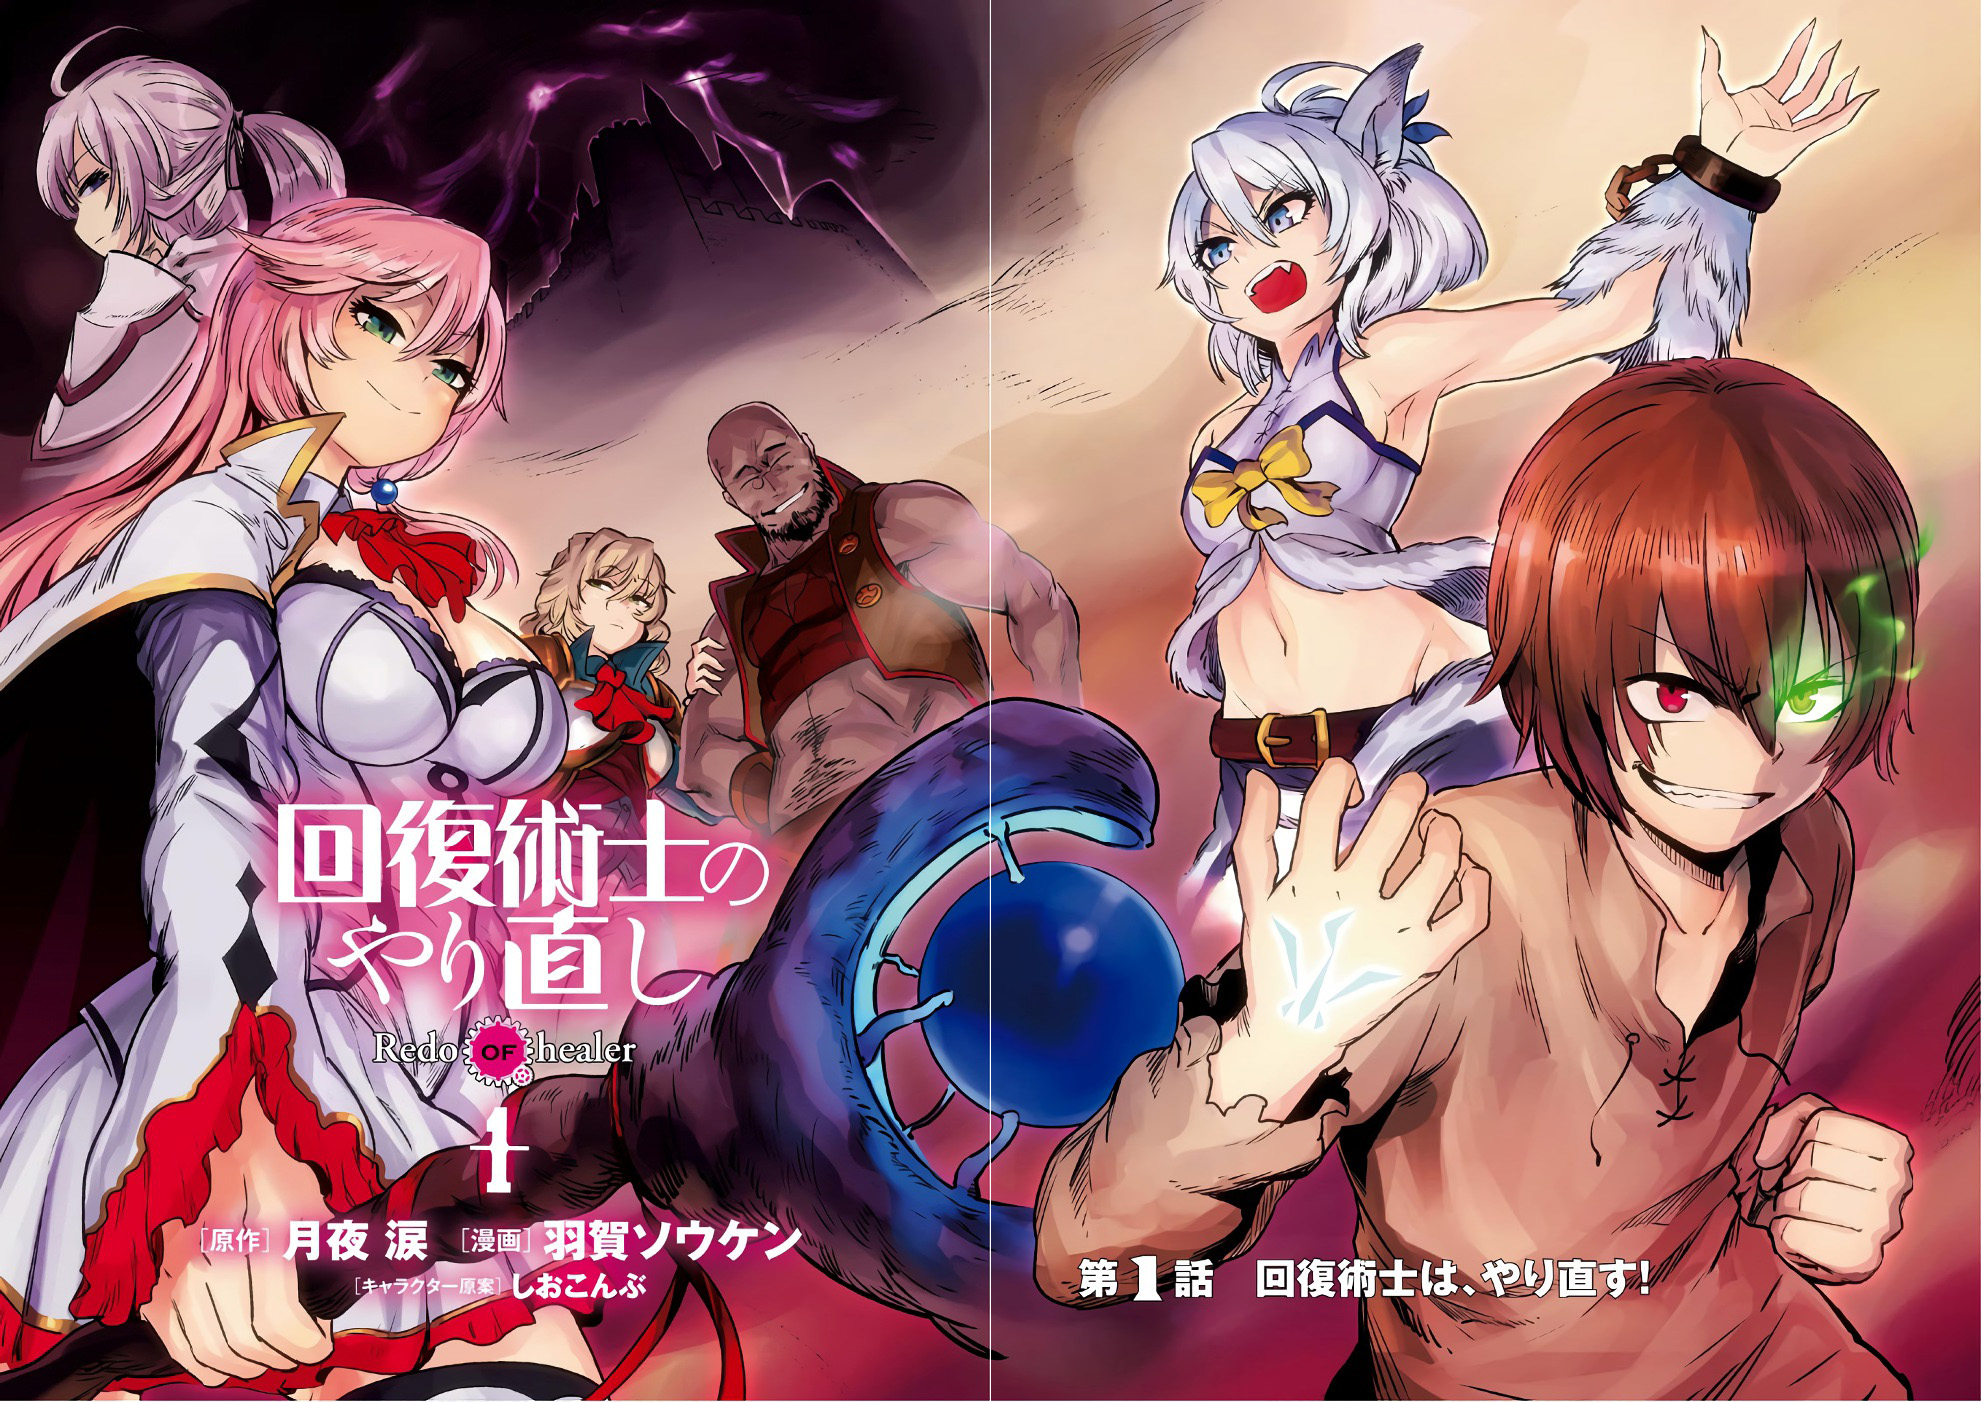 Redo Of Healer Chapter 1 Manga Chapter 1.1 | Kaifuku Jutsushi no Yarinaoshi Wiki | Fandom